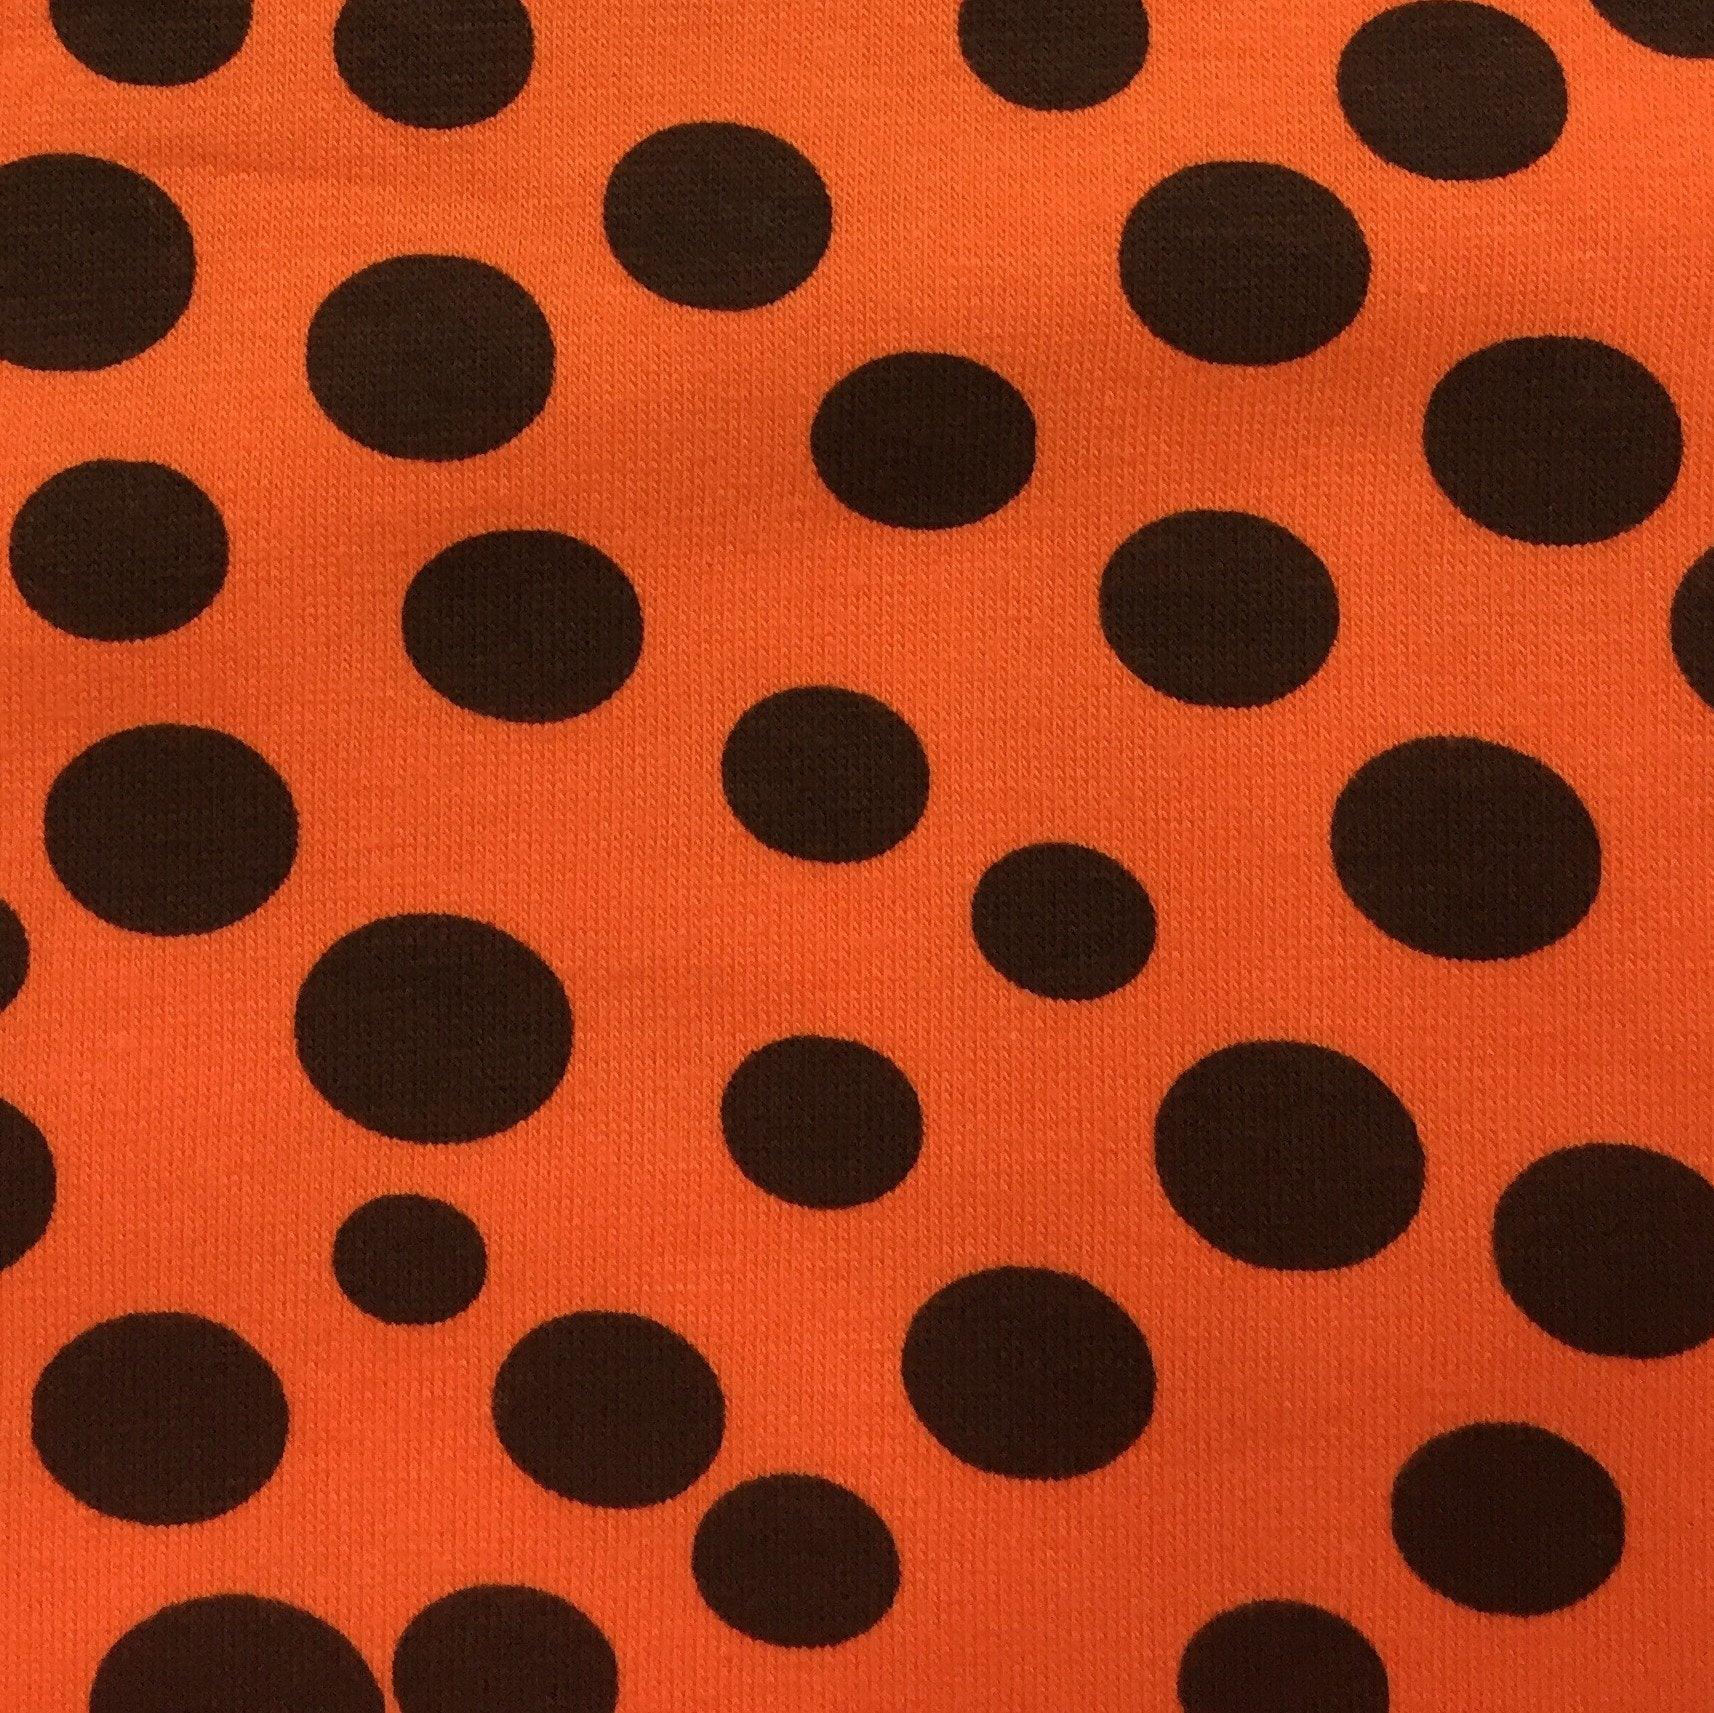 Black Dots on Orange Cotton/Spandex Jersey Fabric - Nature's Fabrics